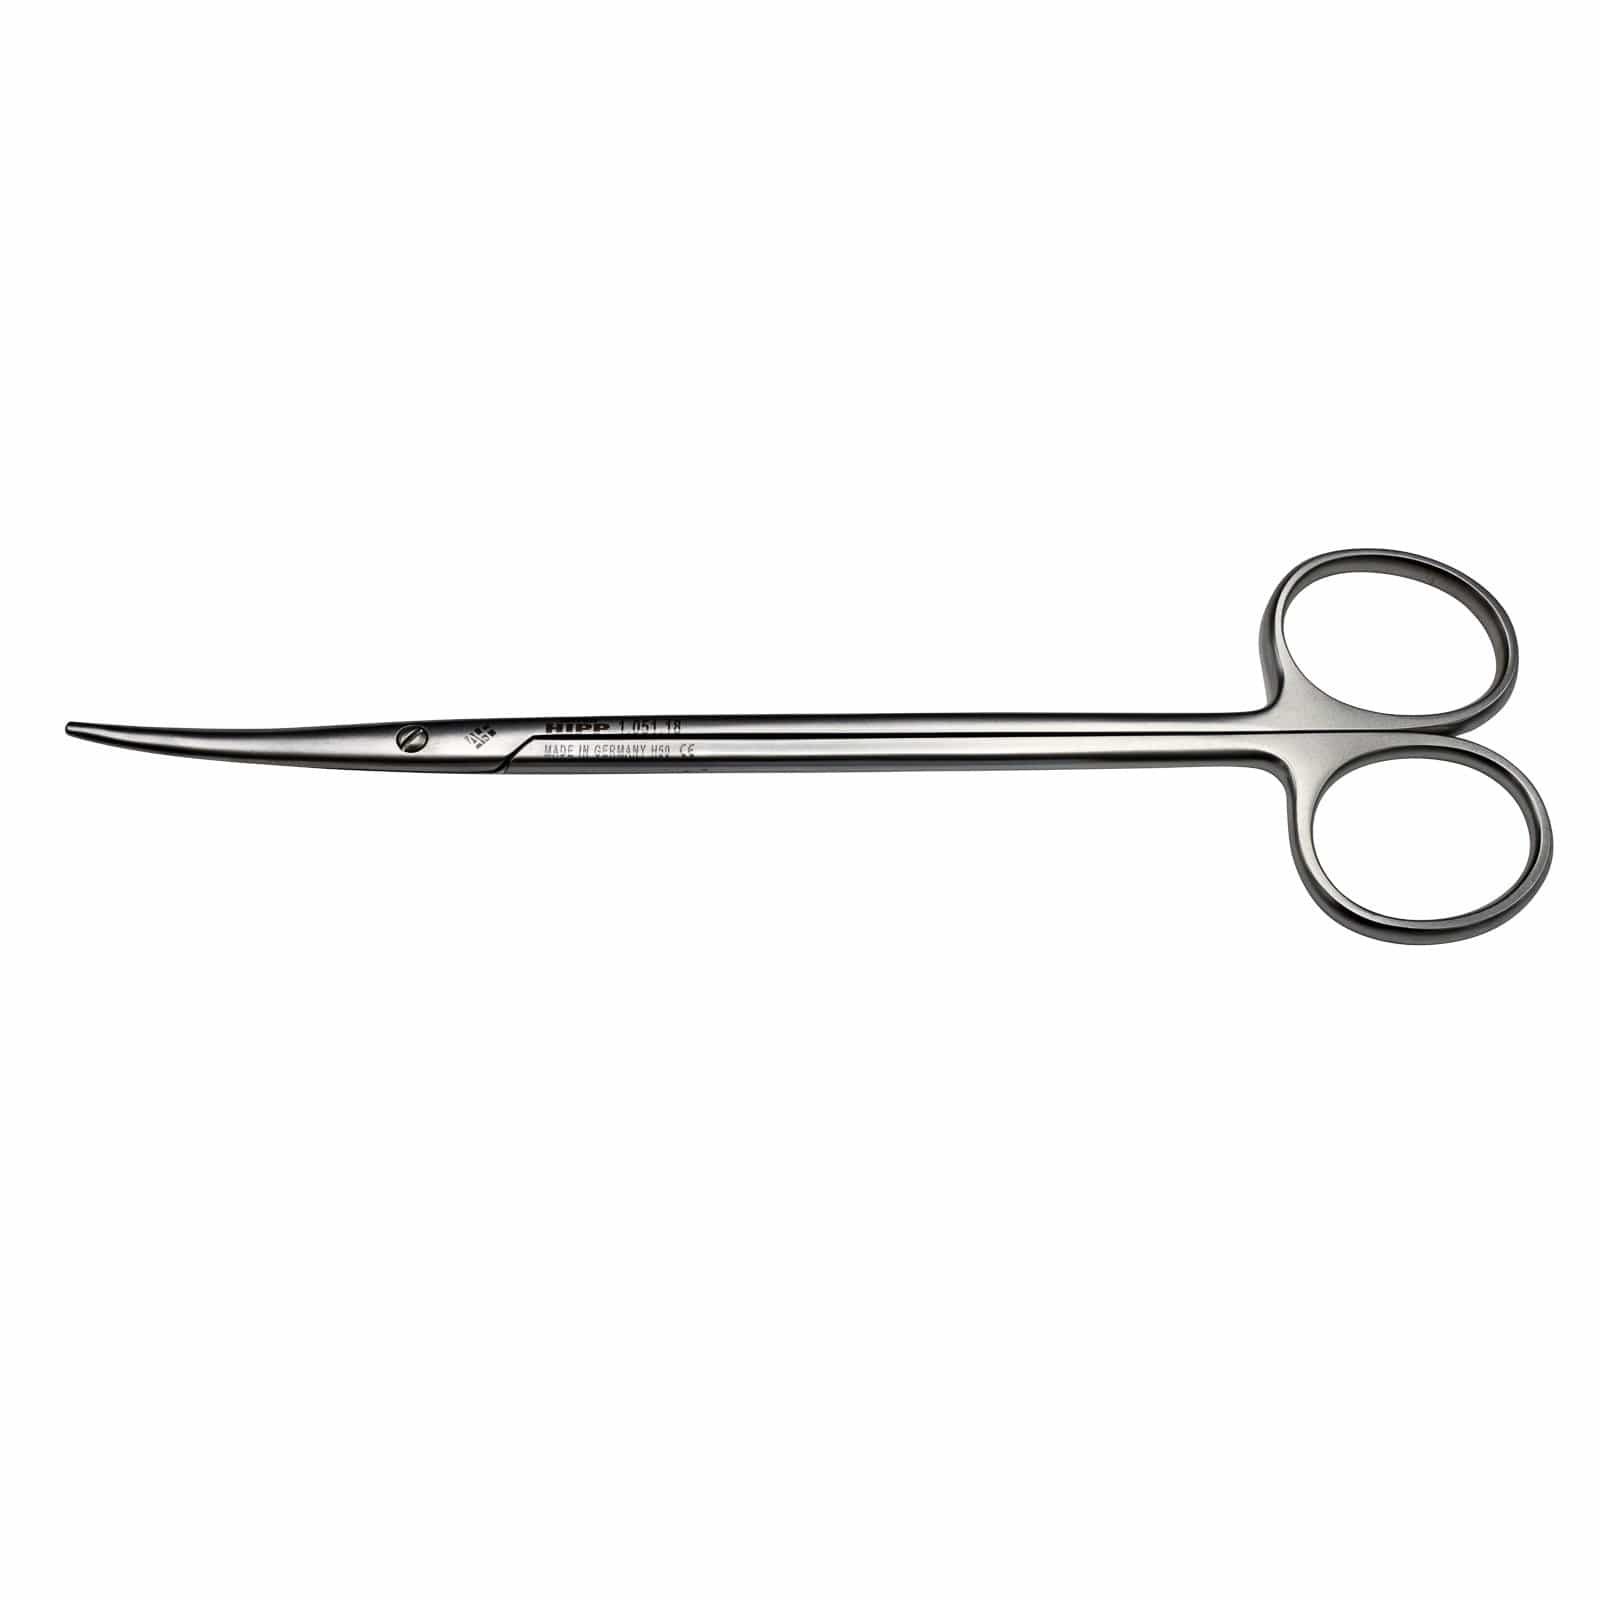 Hipp Surgical Instruments 18cm / Curved / Blunt/Blunt Hipp Metzenbaum Scissors